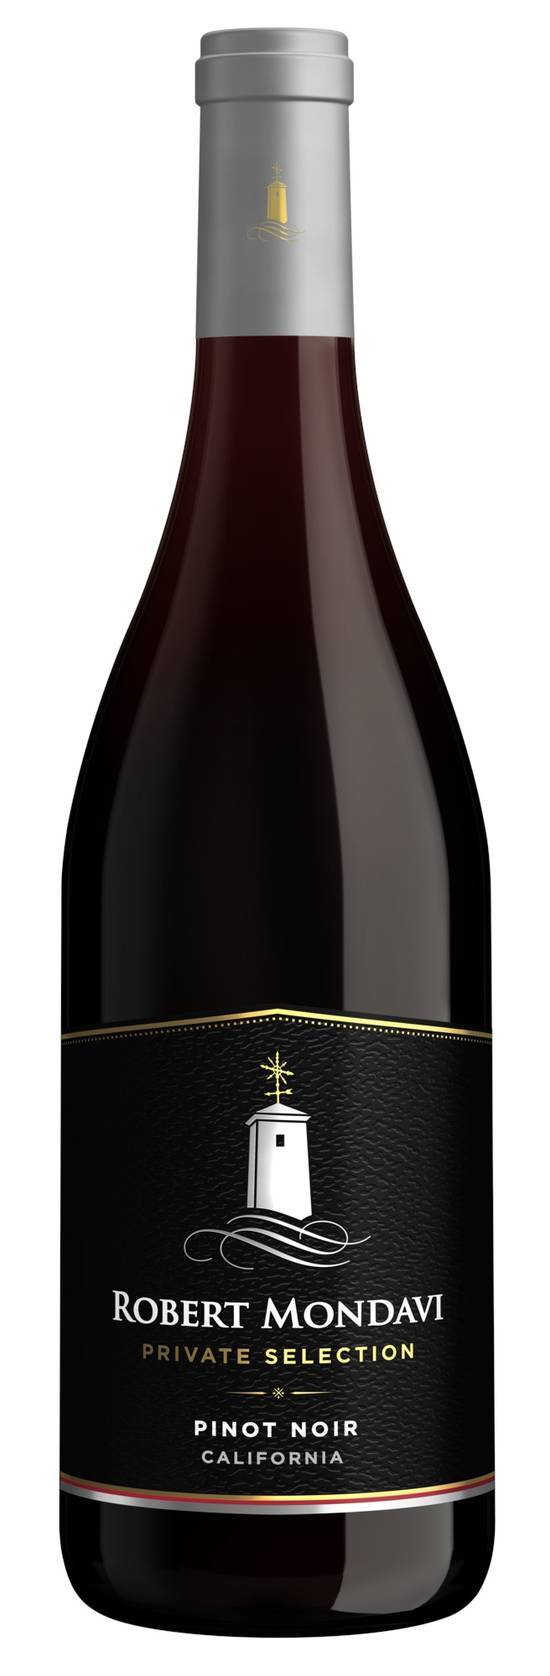 Robert Mondavi Private Selection Pinot Noir Red Wine (750ml bottle)